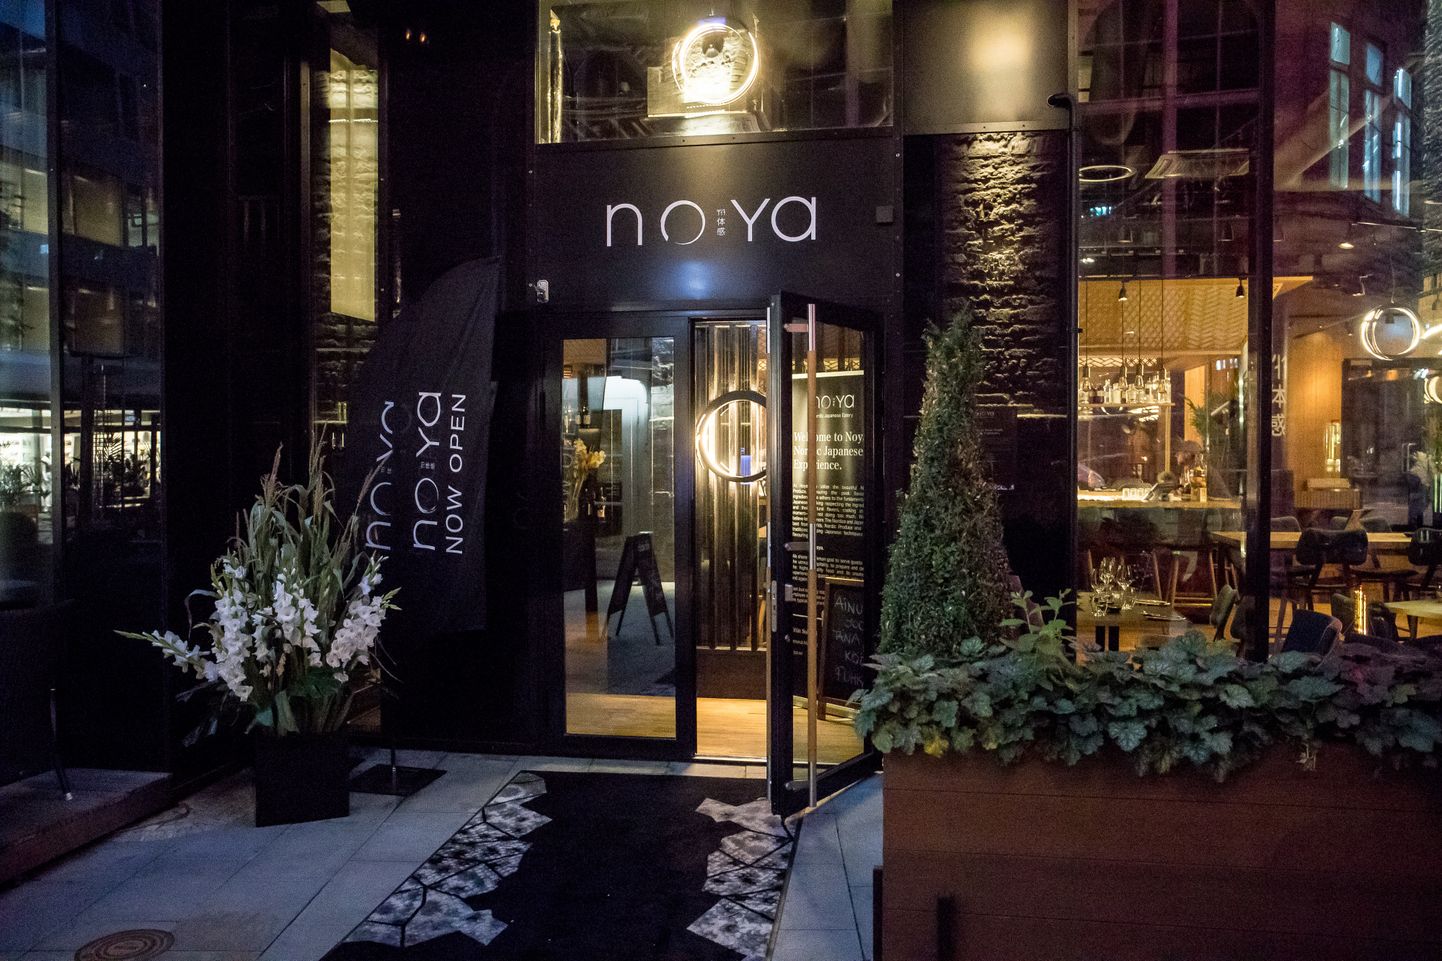 Tallinn 03.09.2018
Noya restoran. 

Restoran Noya
FOTO:SANDER ILVEST/EESTI MEEDIA